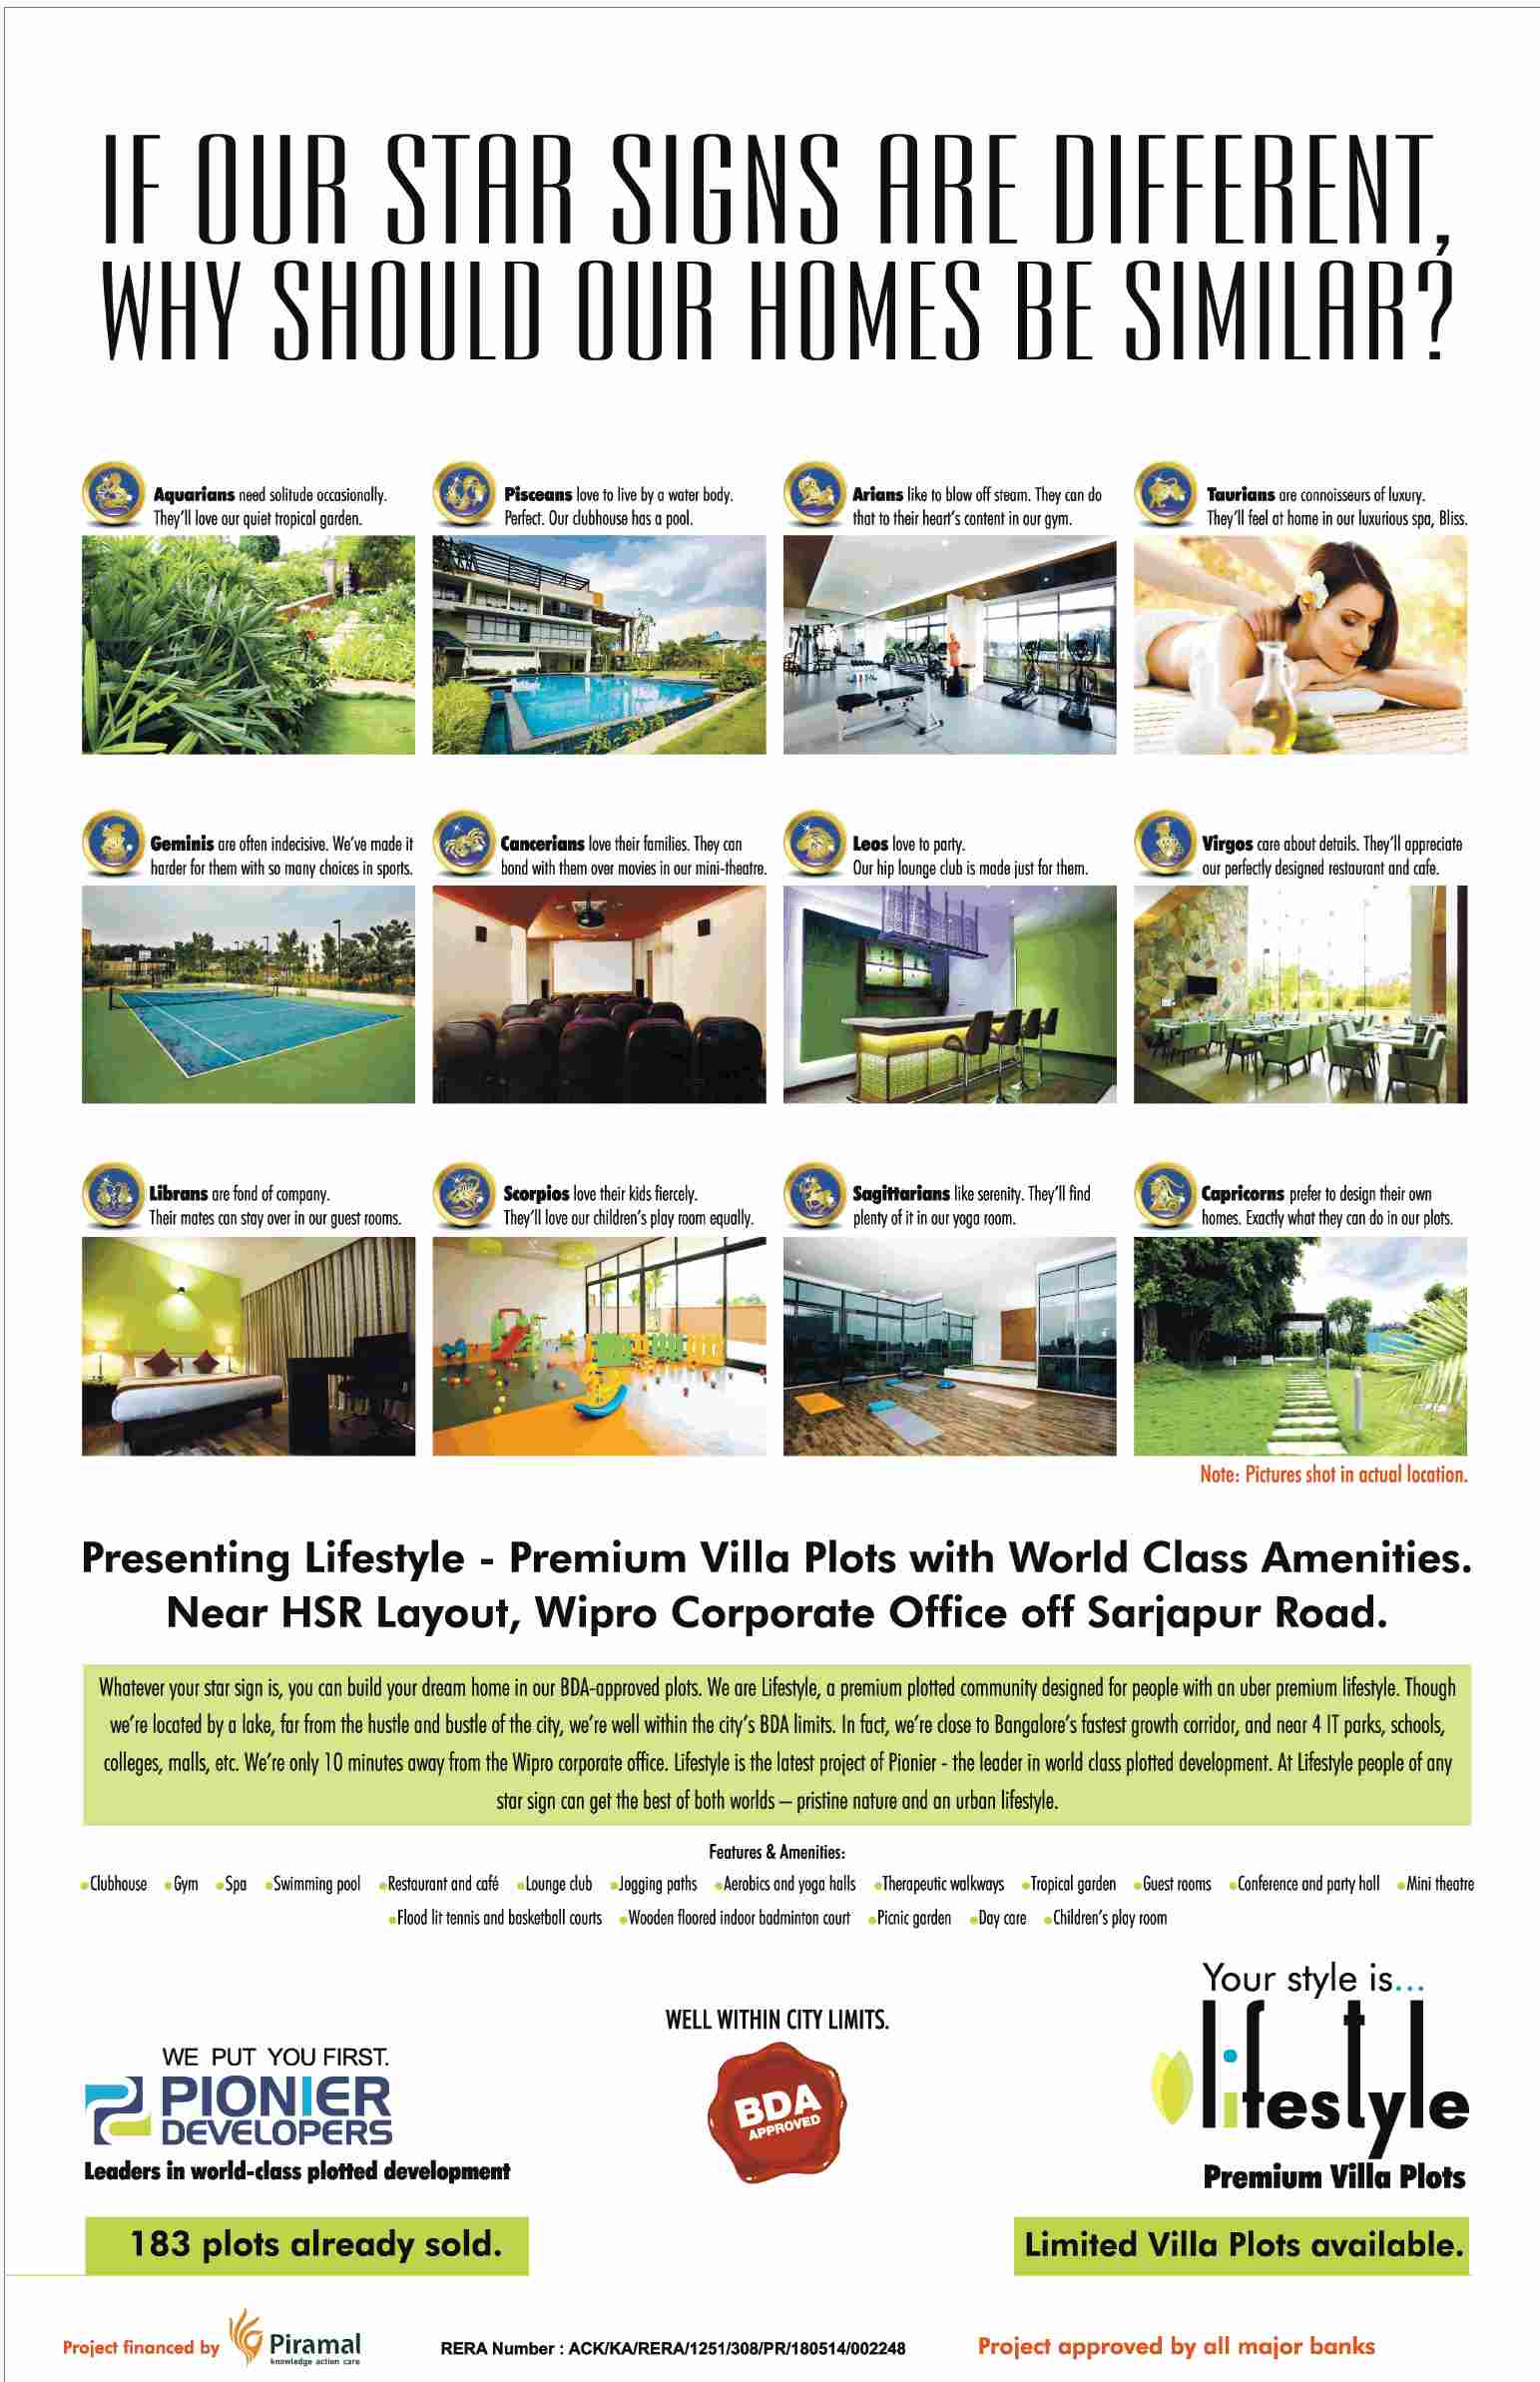 Presenting Pionier Lifestyle with premium villa plots & world-class amenities in Bangalore Update